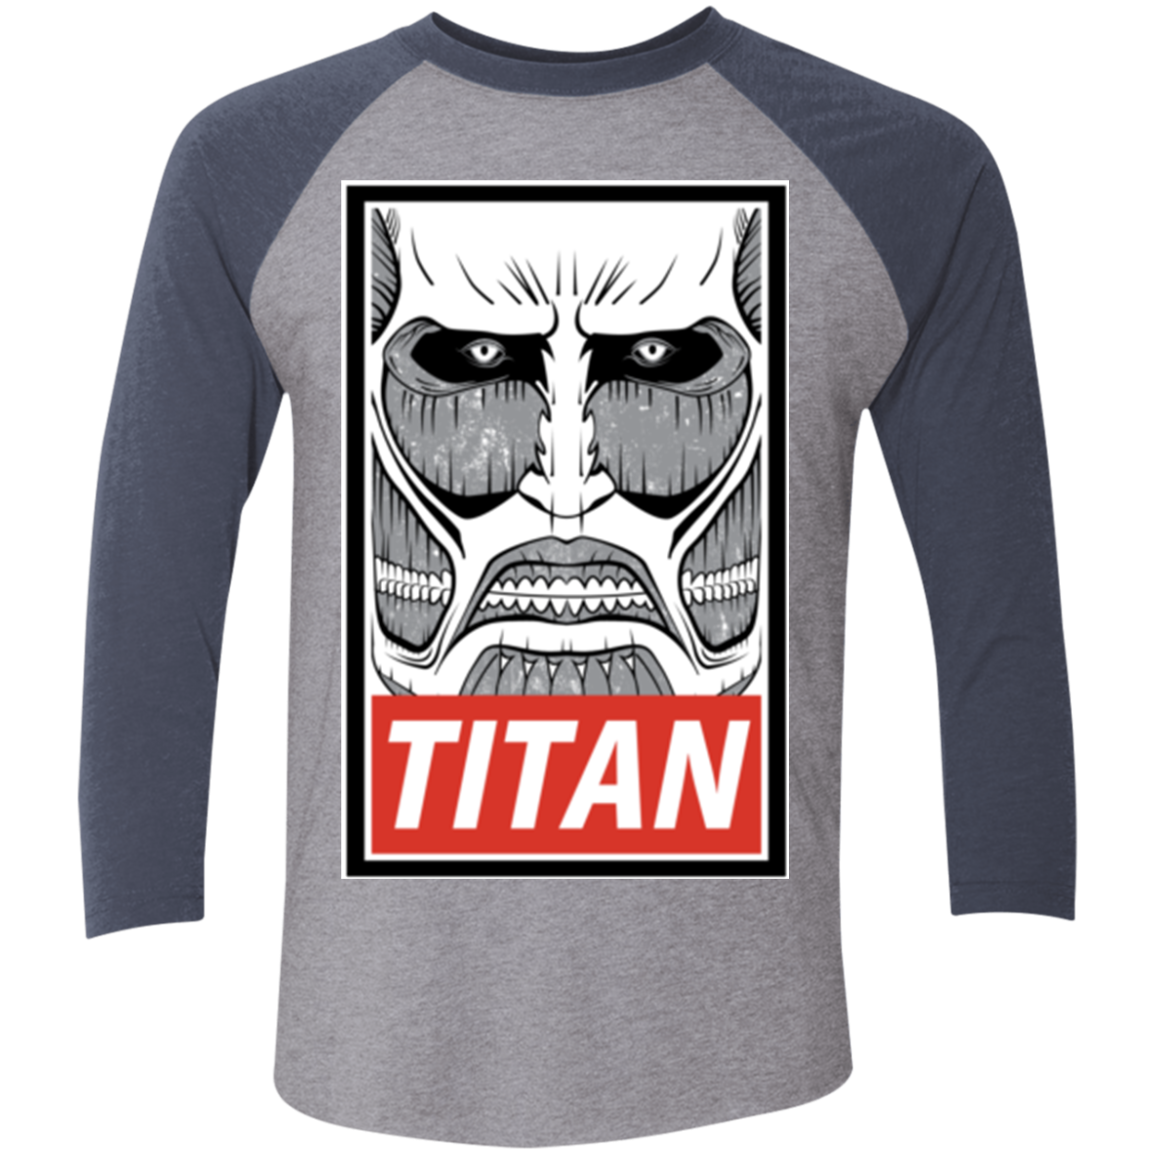 Titan Triblend 3/4 Sleeve